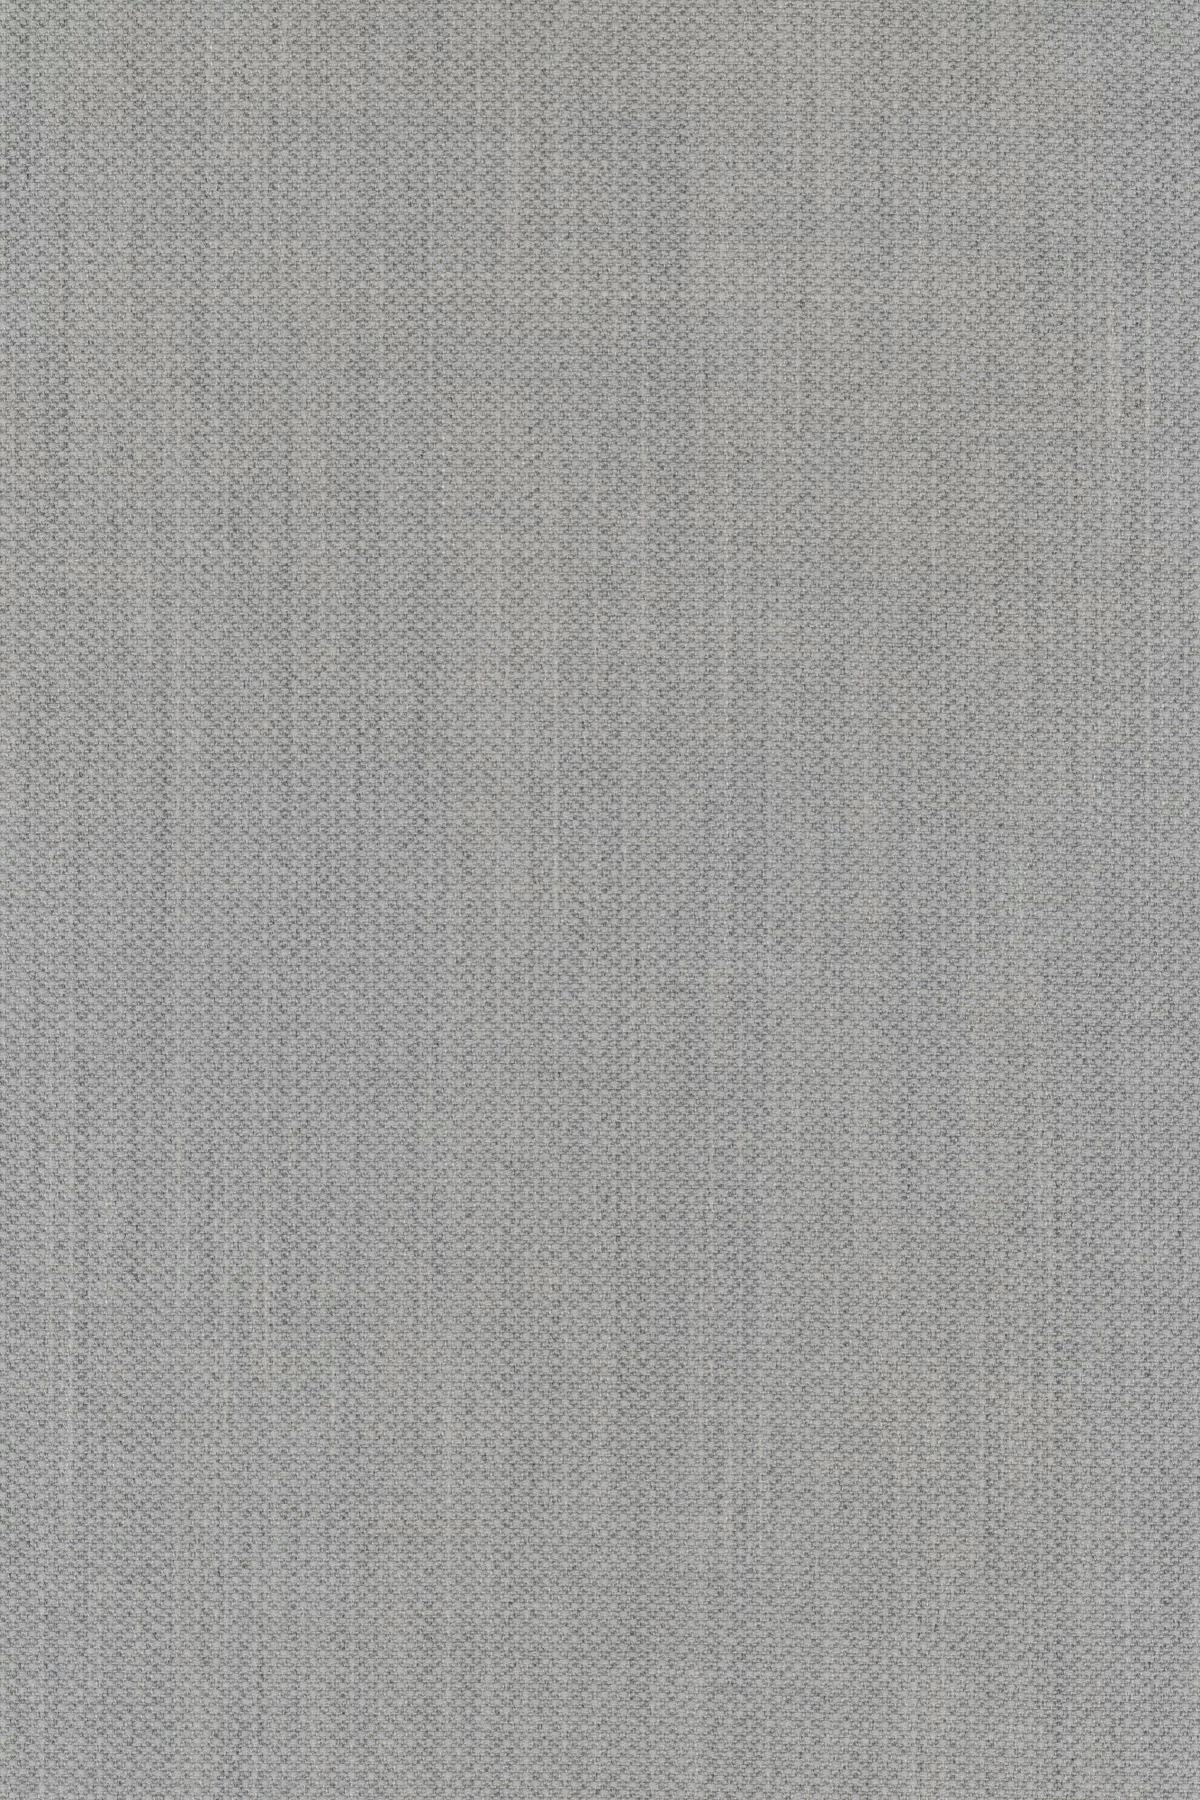 Fabric sample Fiord 121 grey